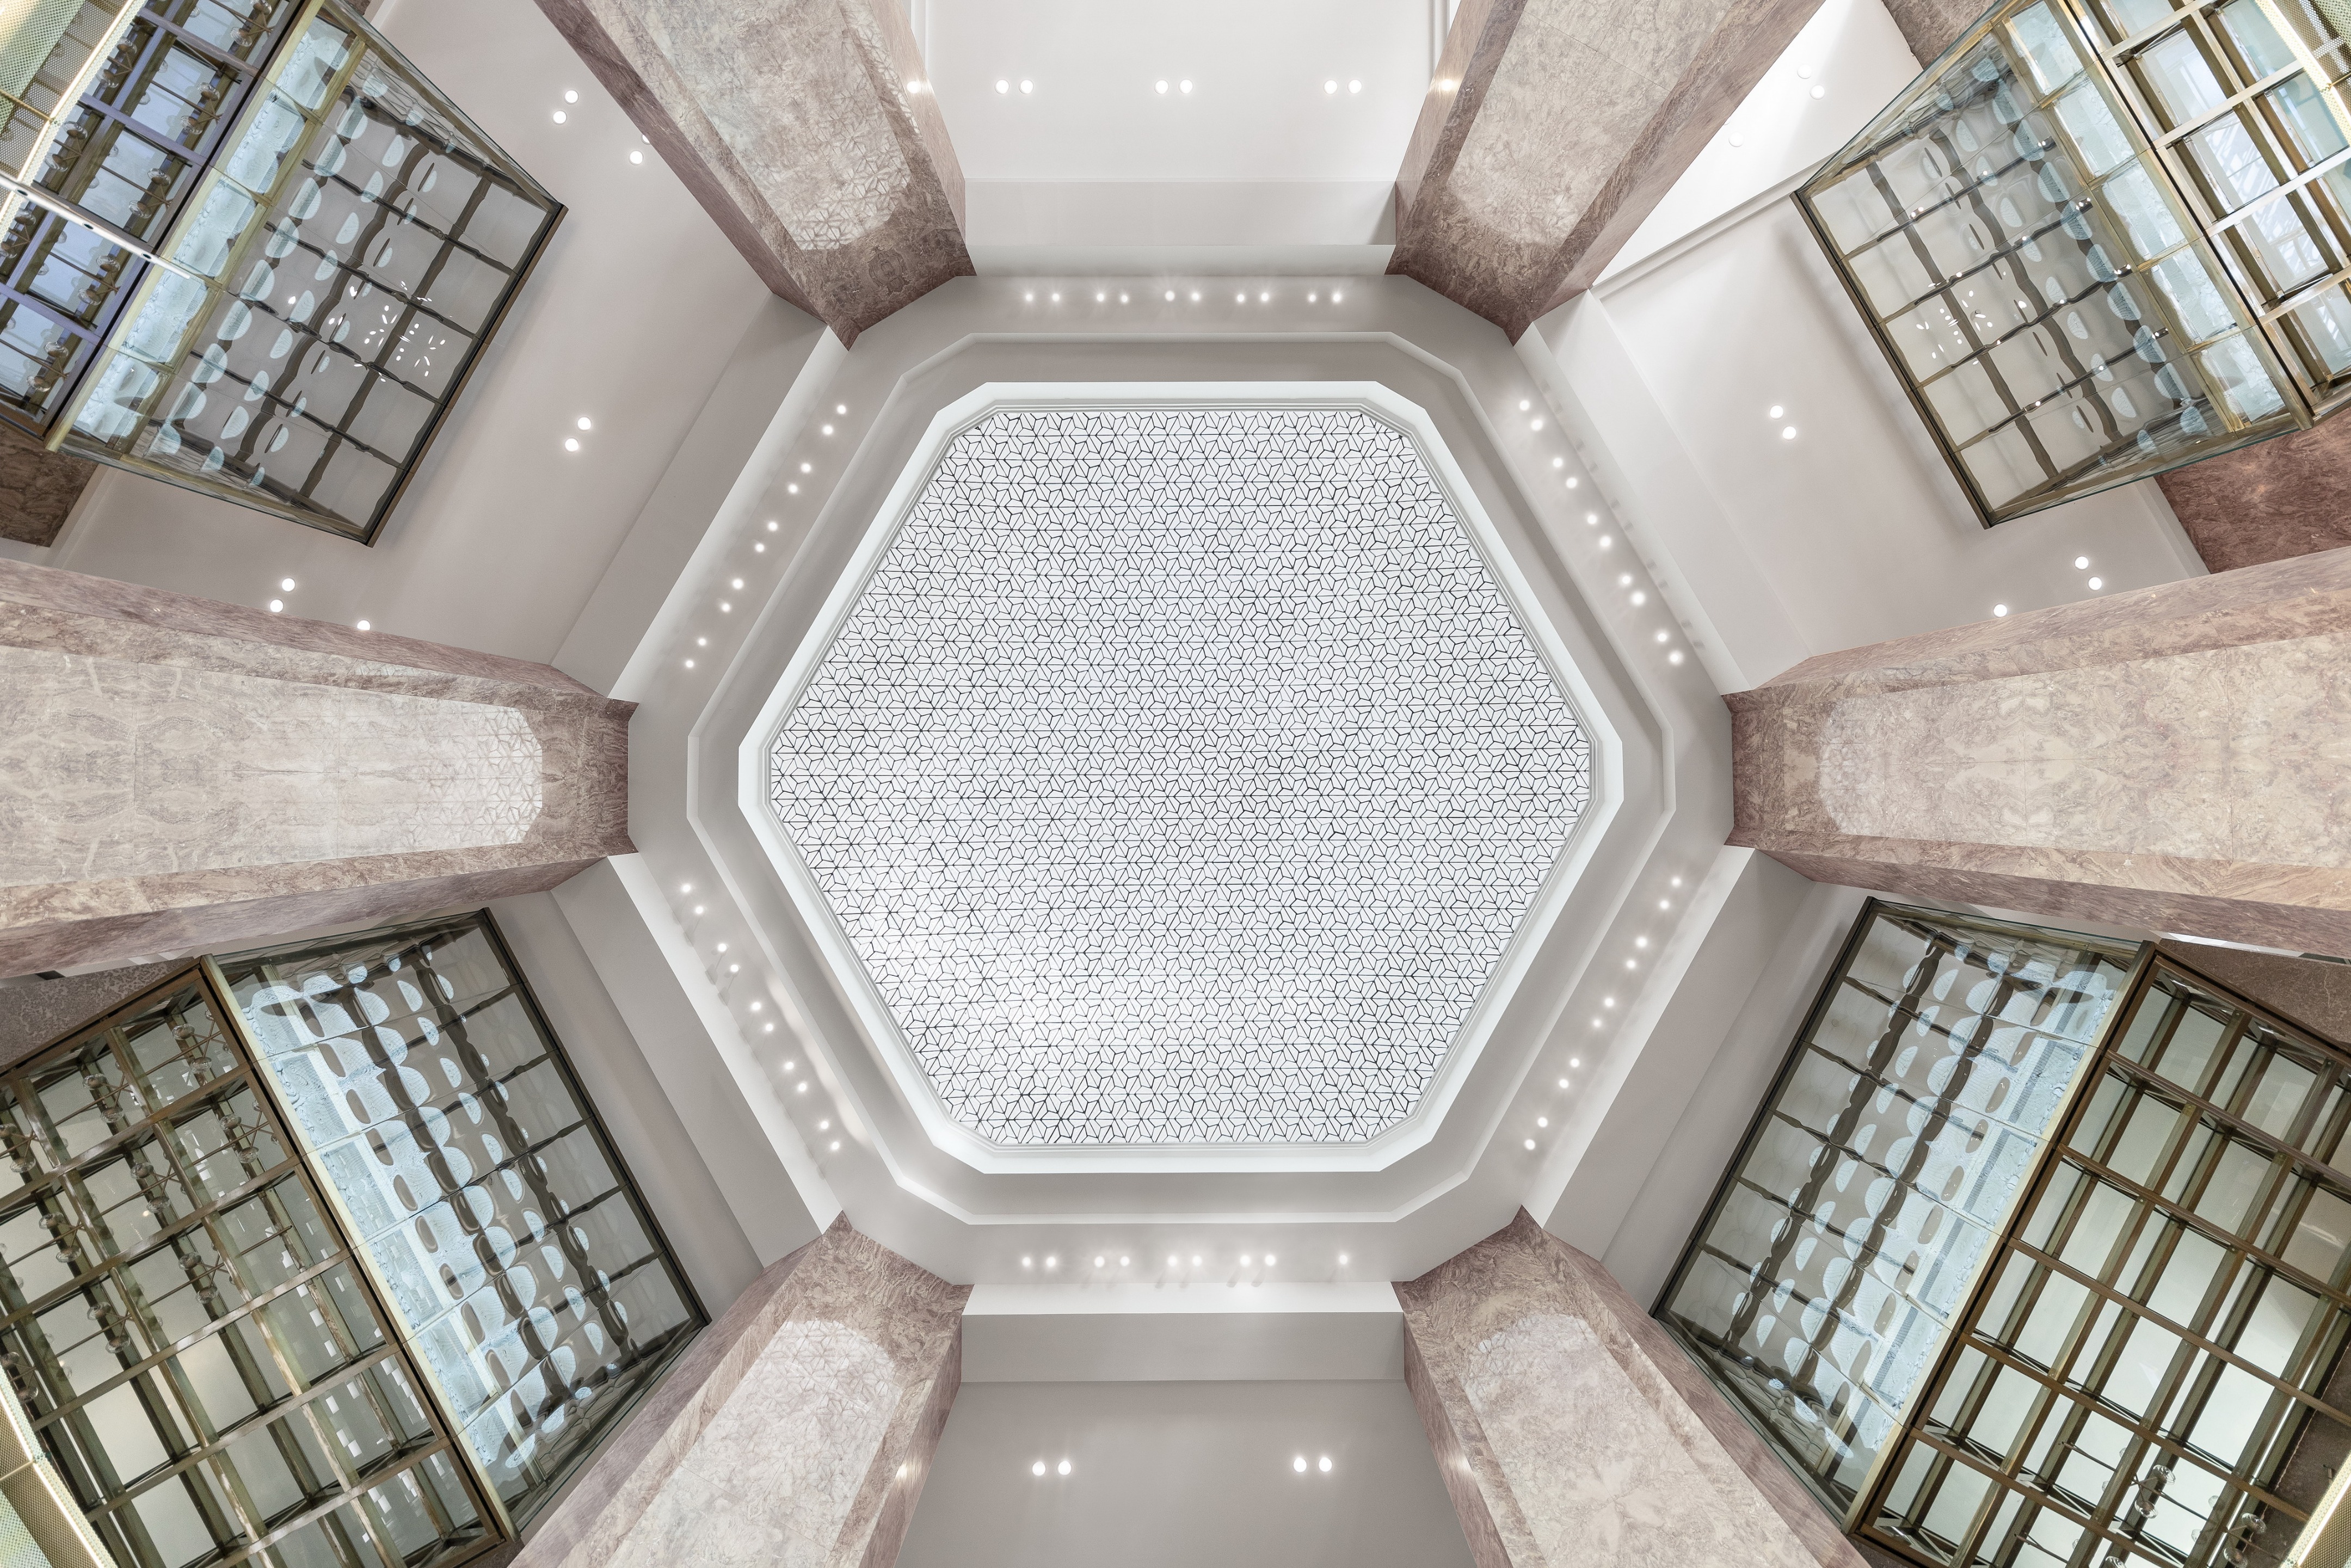 Galeries Lafayette Champs-Elysées by BIG – Bjarke Ingels Group, 2019-09-01